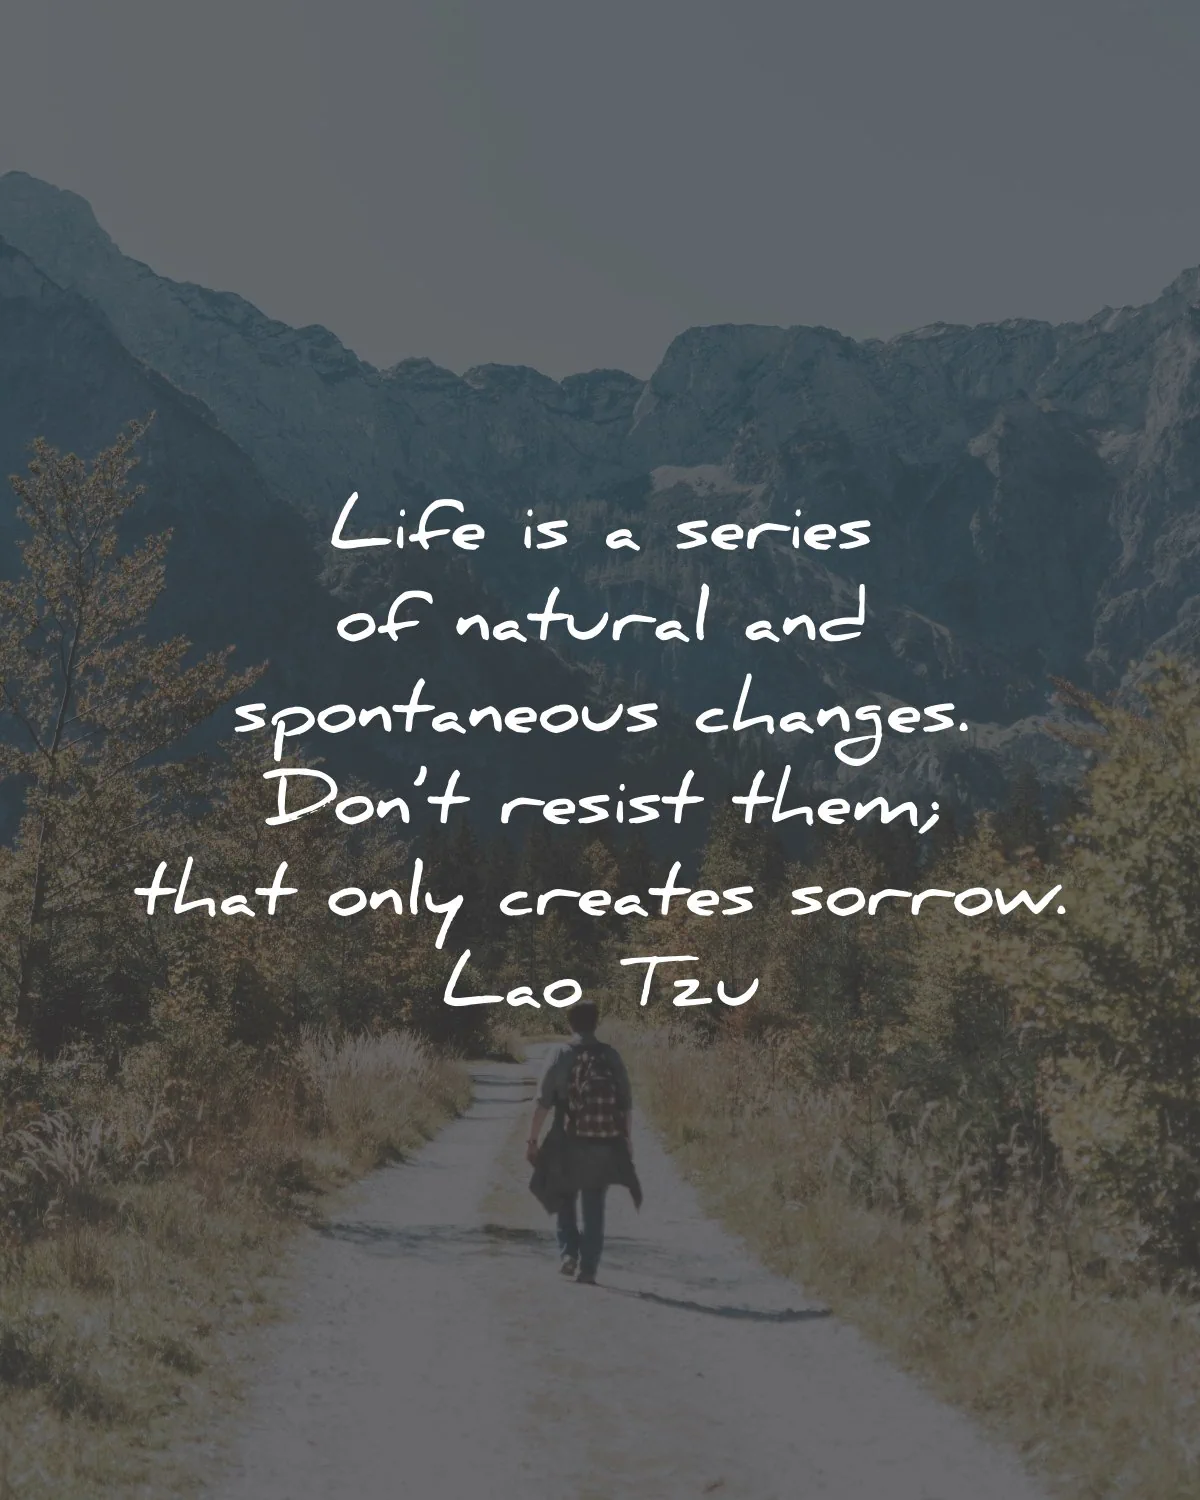 stress quotes life series natural changes resist lao tzu wisdom